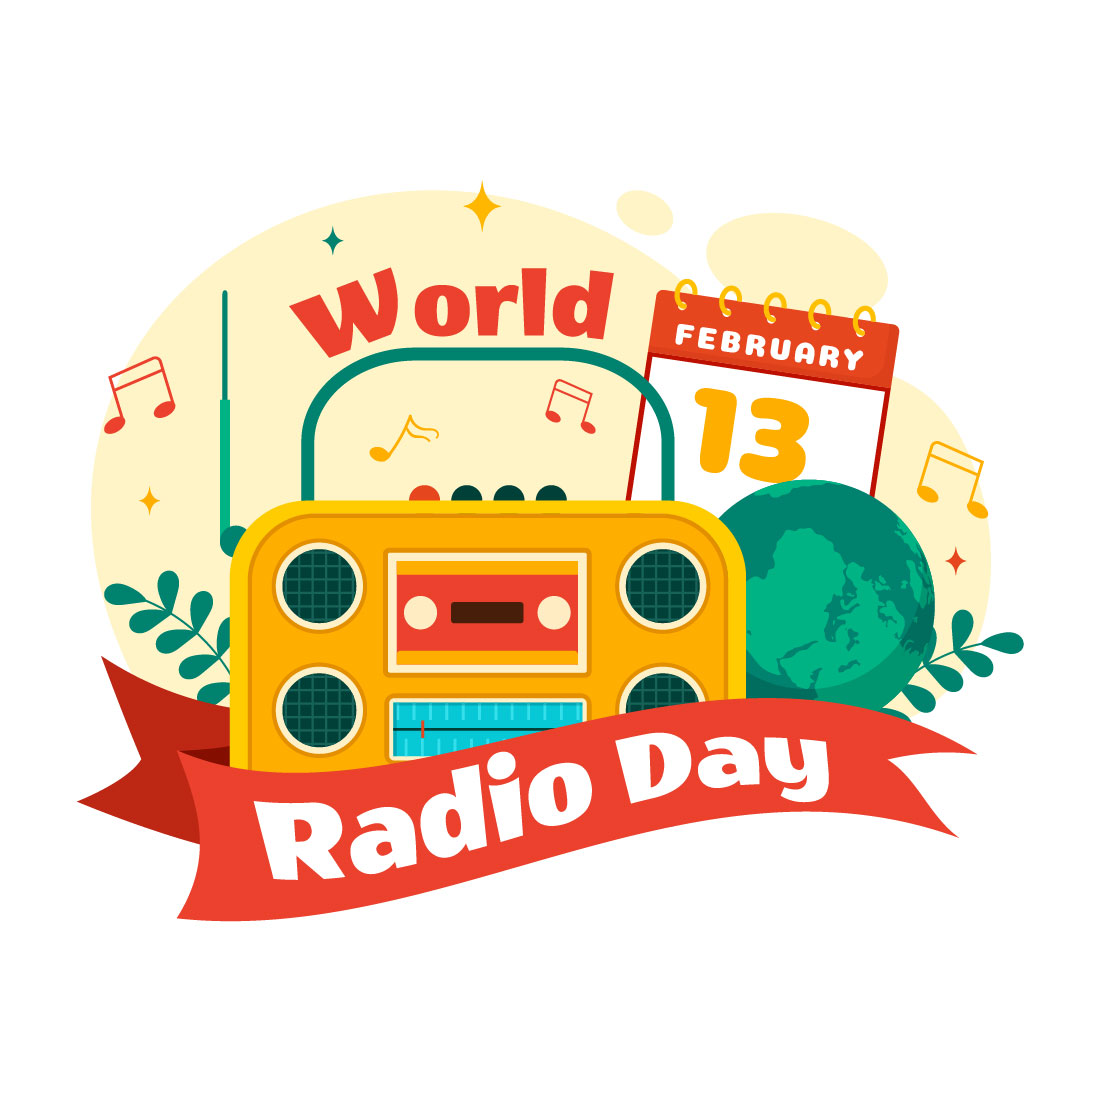 13 World Radio Day Illustration preview image.